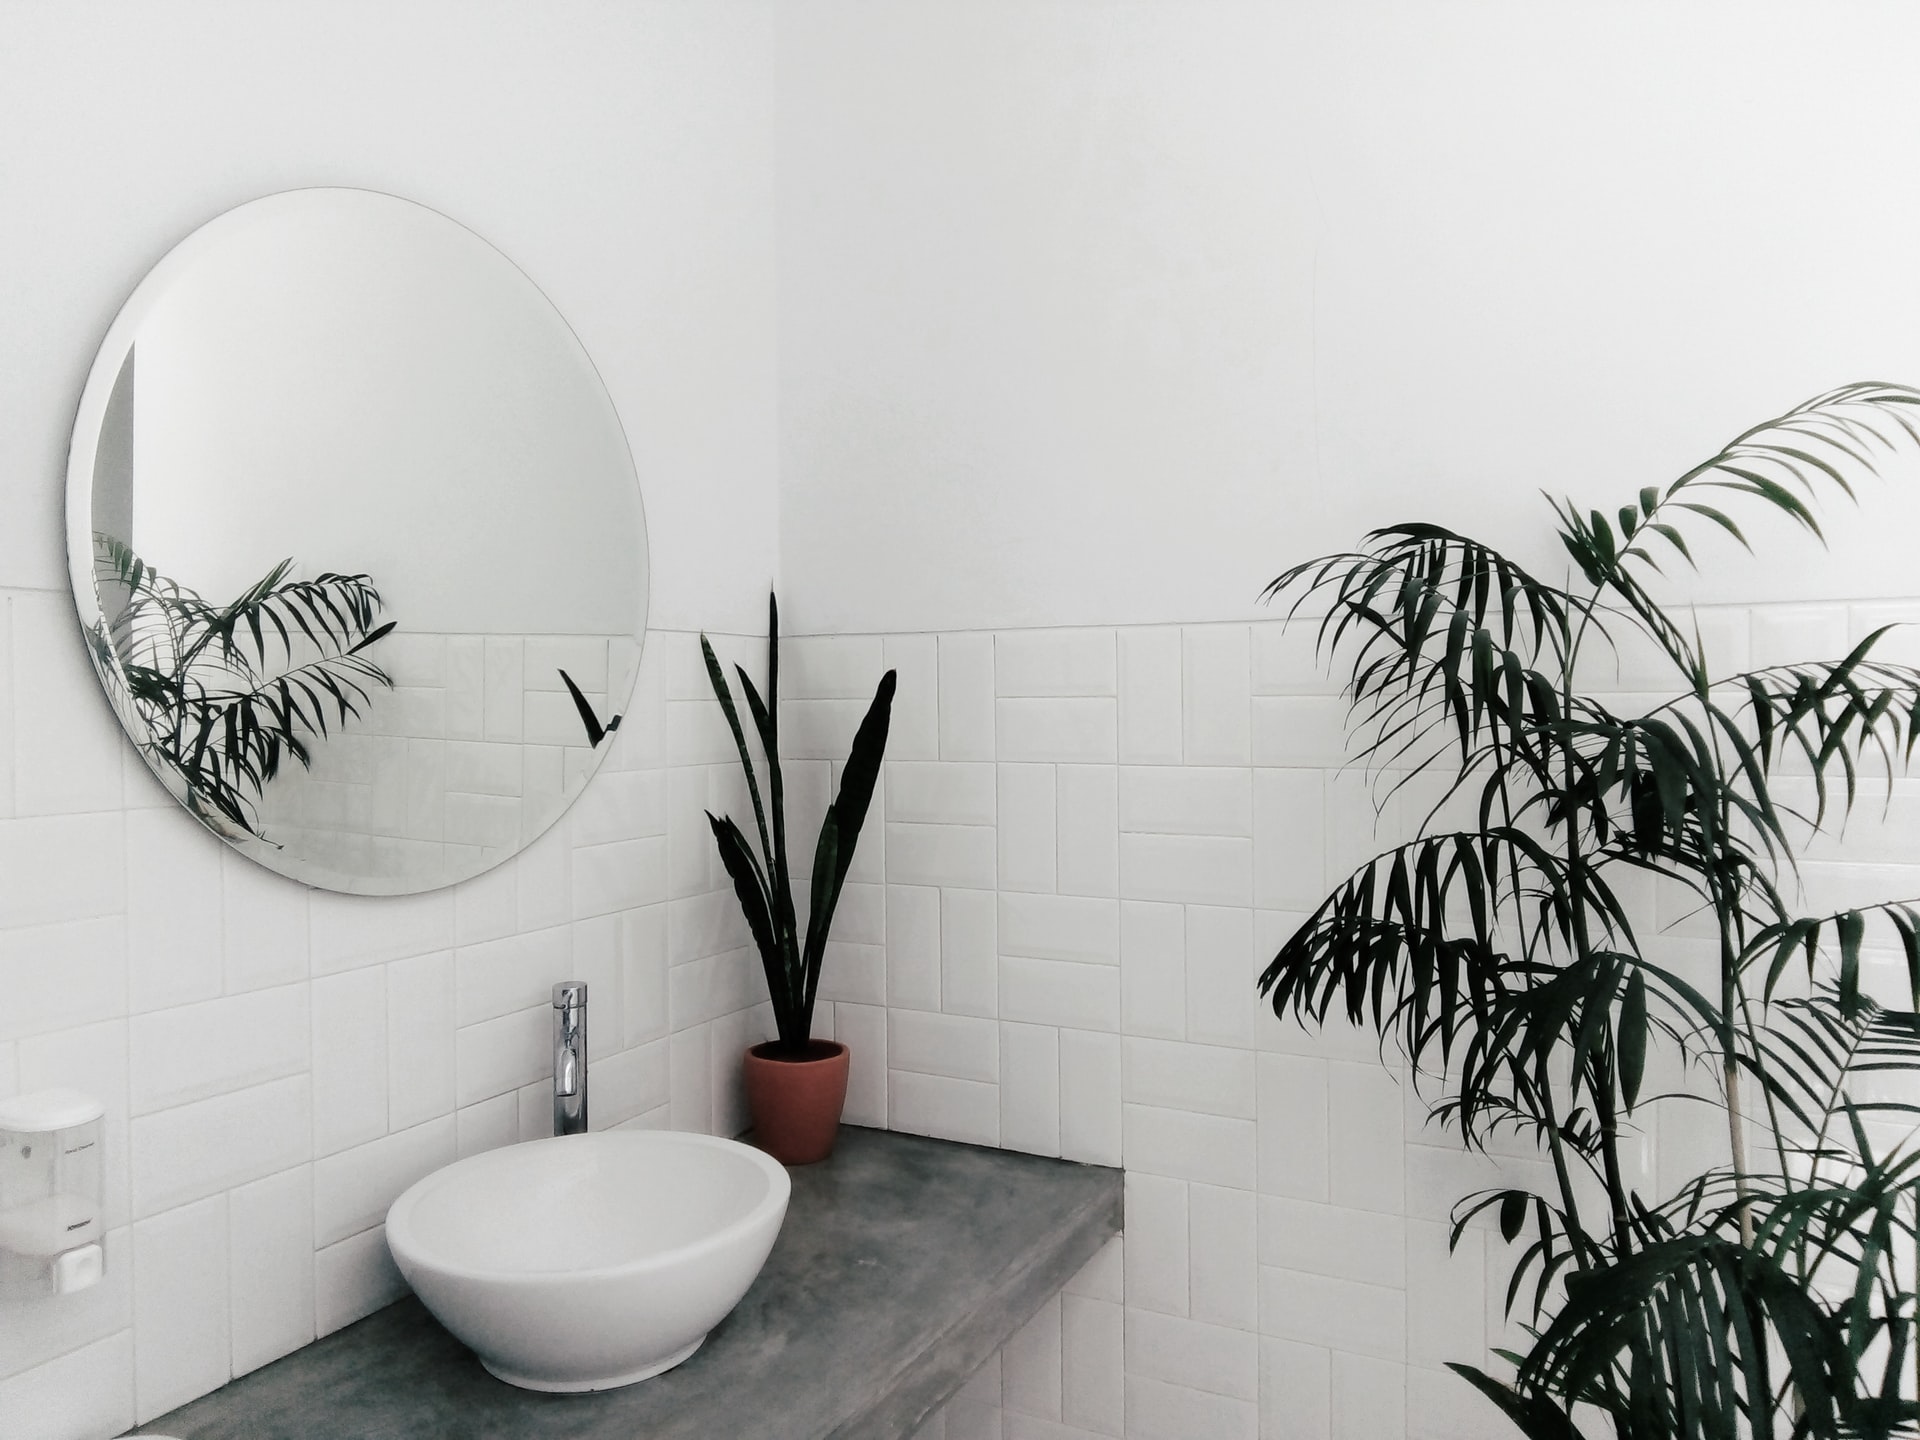 https://kitchenandbathshop.com/wp-content/uploads/2021/08/design-minimalist-bathroom-remodel-ideas.jpg